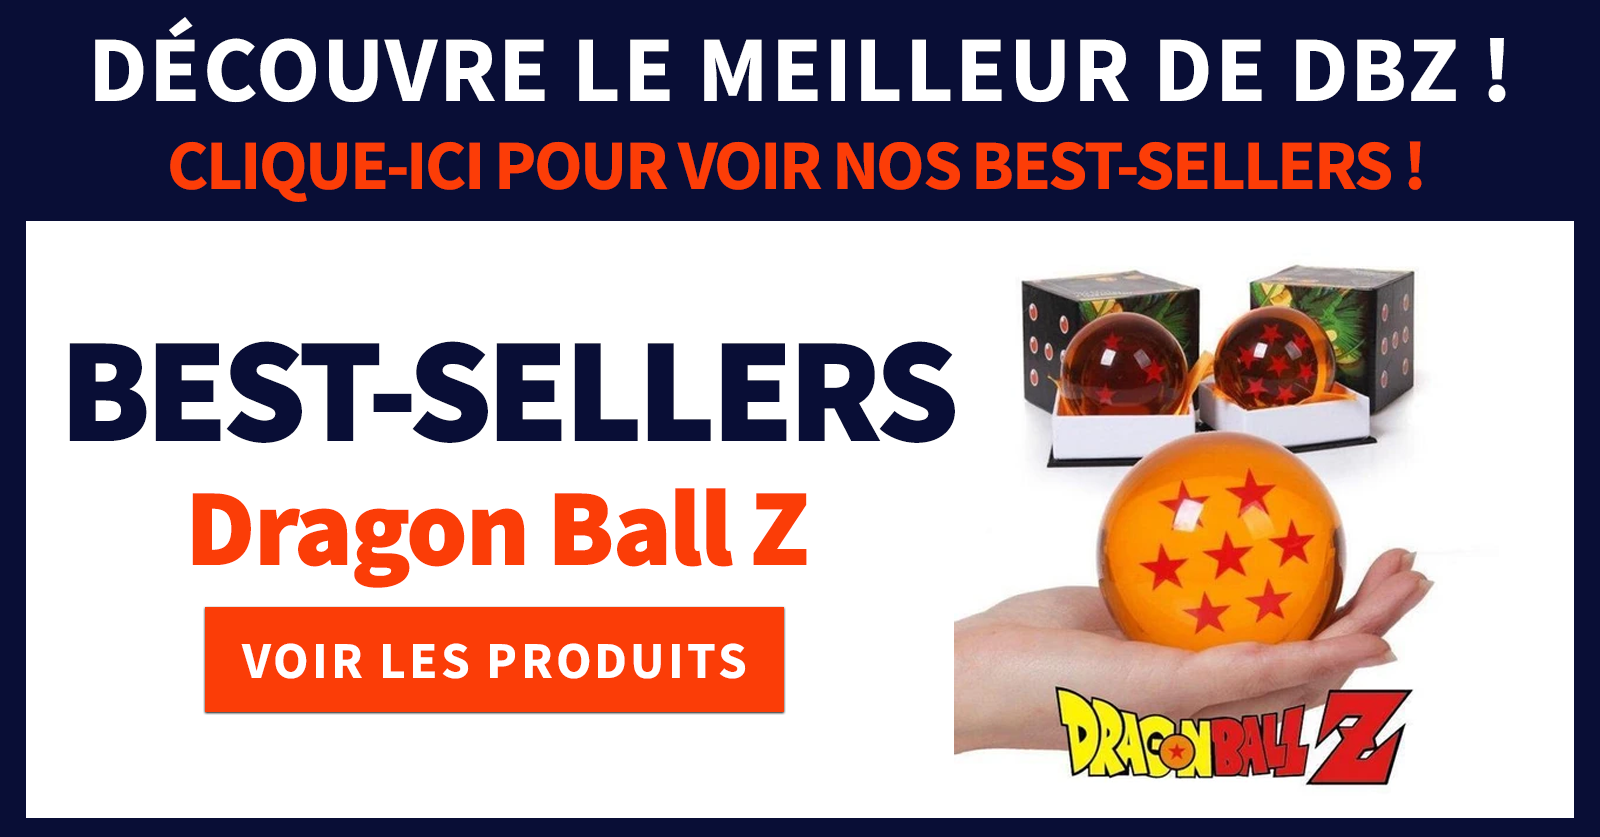 Best-sellers dbz